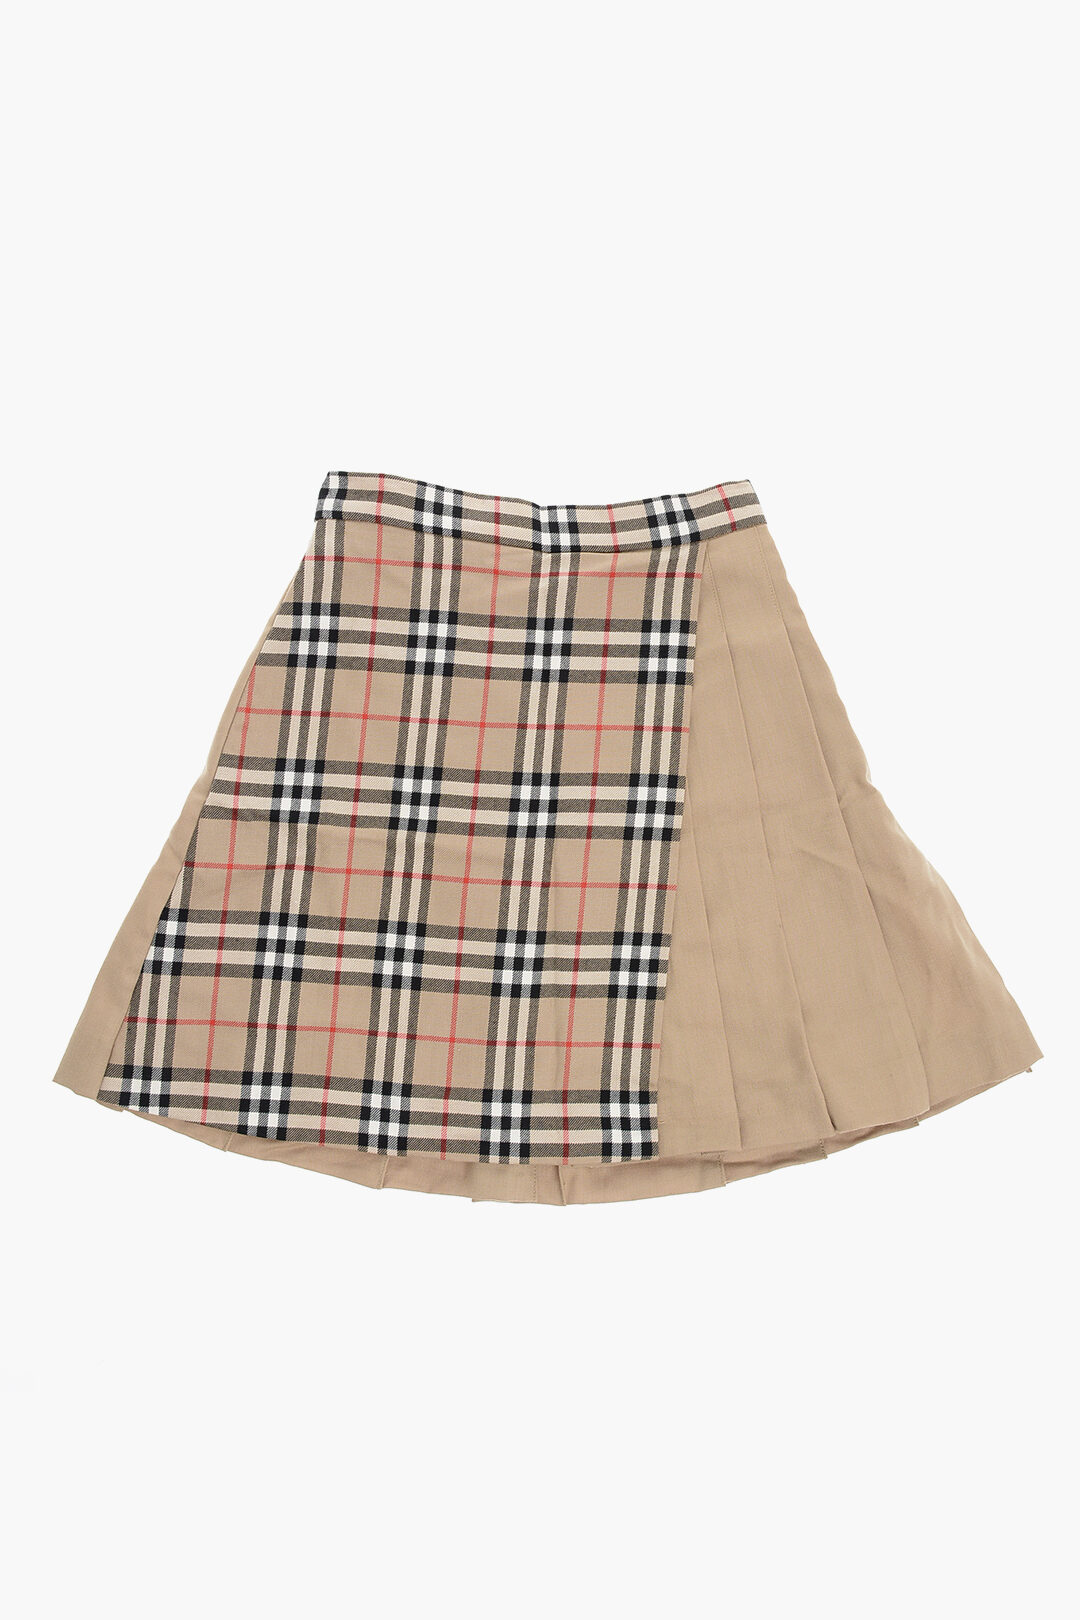 Burberry Girls Checked Skirt with Black Waistband | BAMBINIFASHION.COM